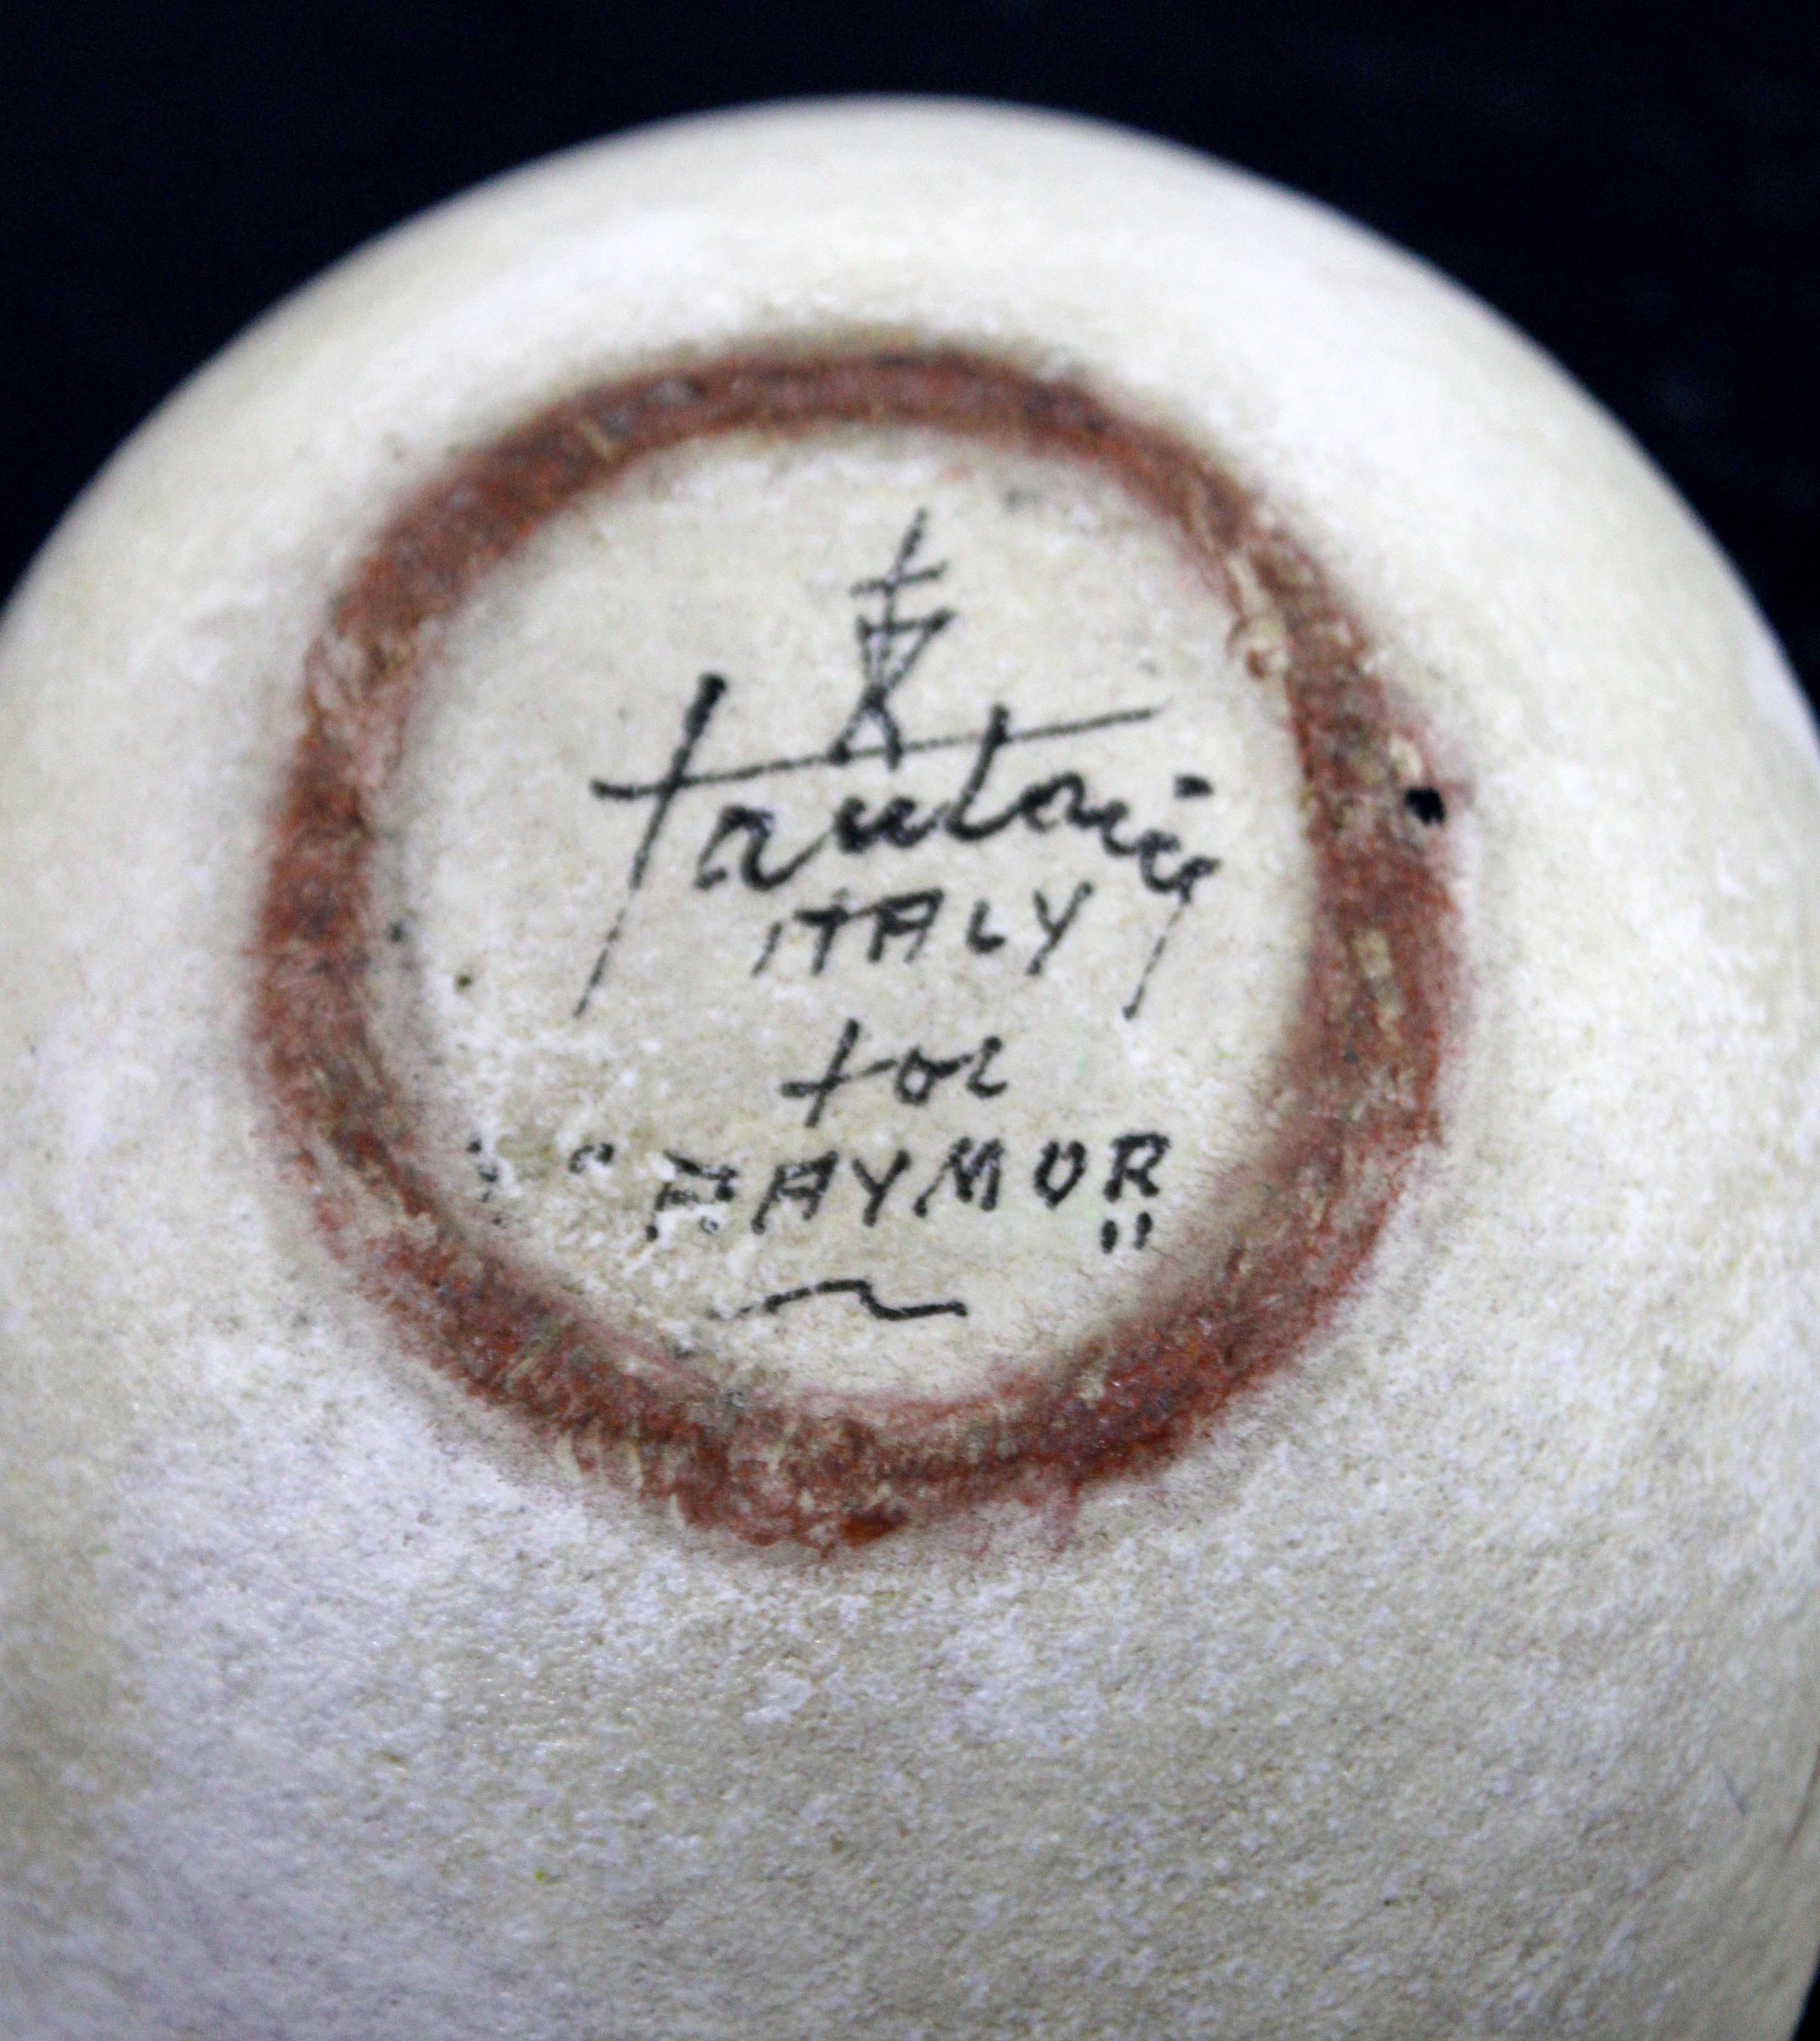 Mid-Century Modern Fantoni Raymor Signed Ceramic Art Bowl Made in Italy 1960s 3